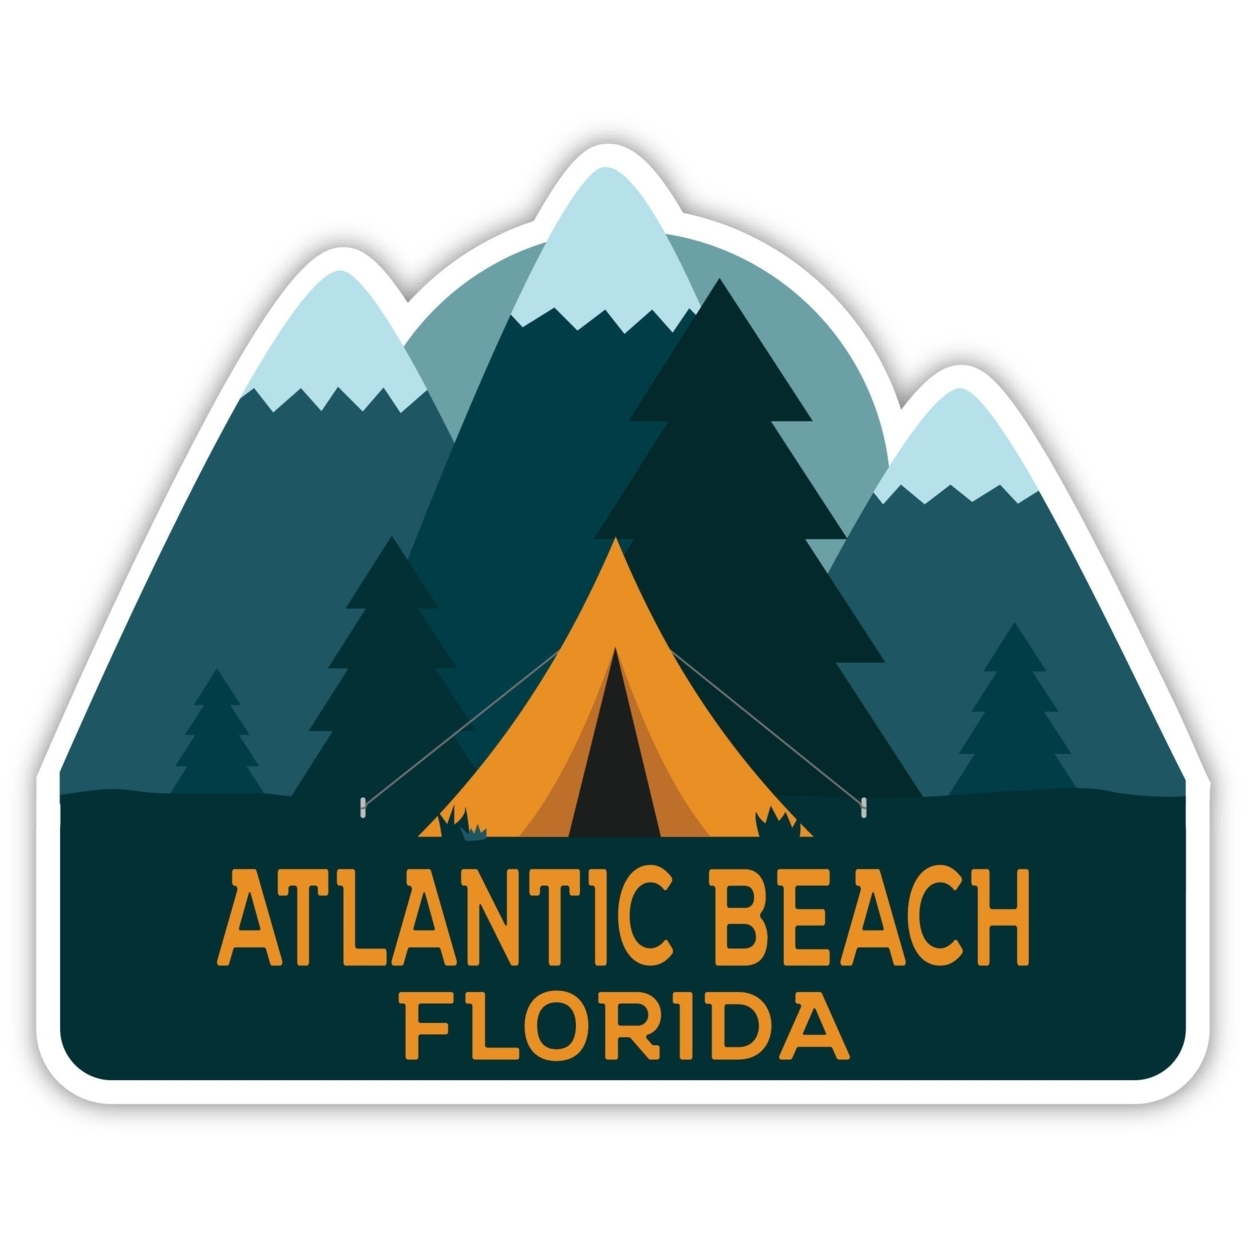 Atlantic Beach Florida Souvenir Decorative Stickers (Choose Theme And Size) - 4-Pack, 2-Inch, Tent